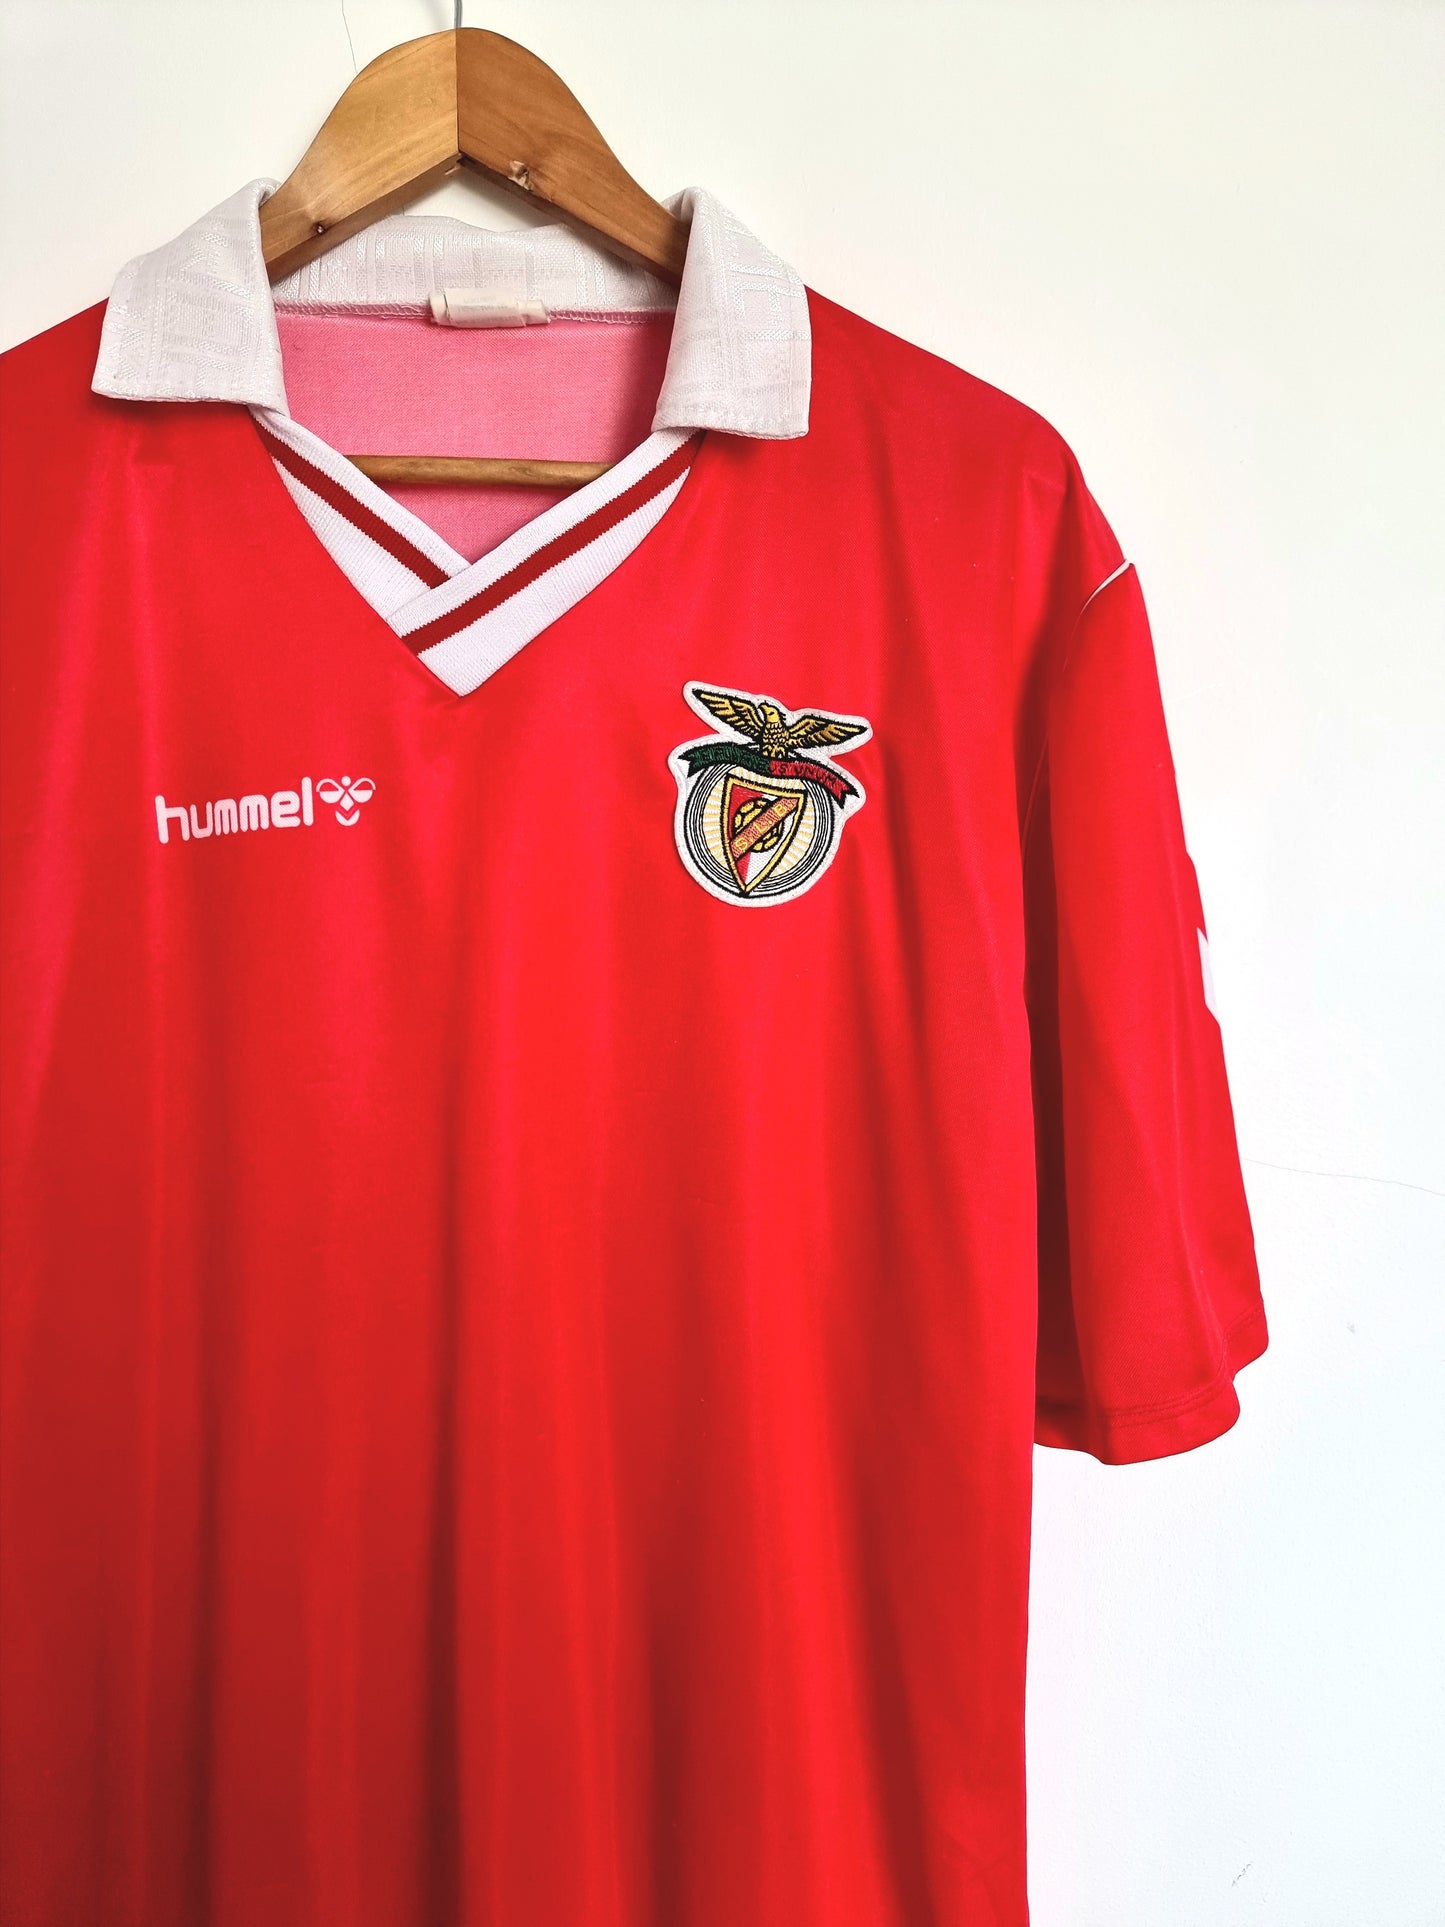 Hummel Benfica 90/91 Match Issue Youth Home Shirt XL